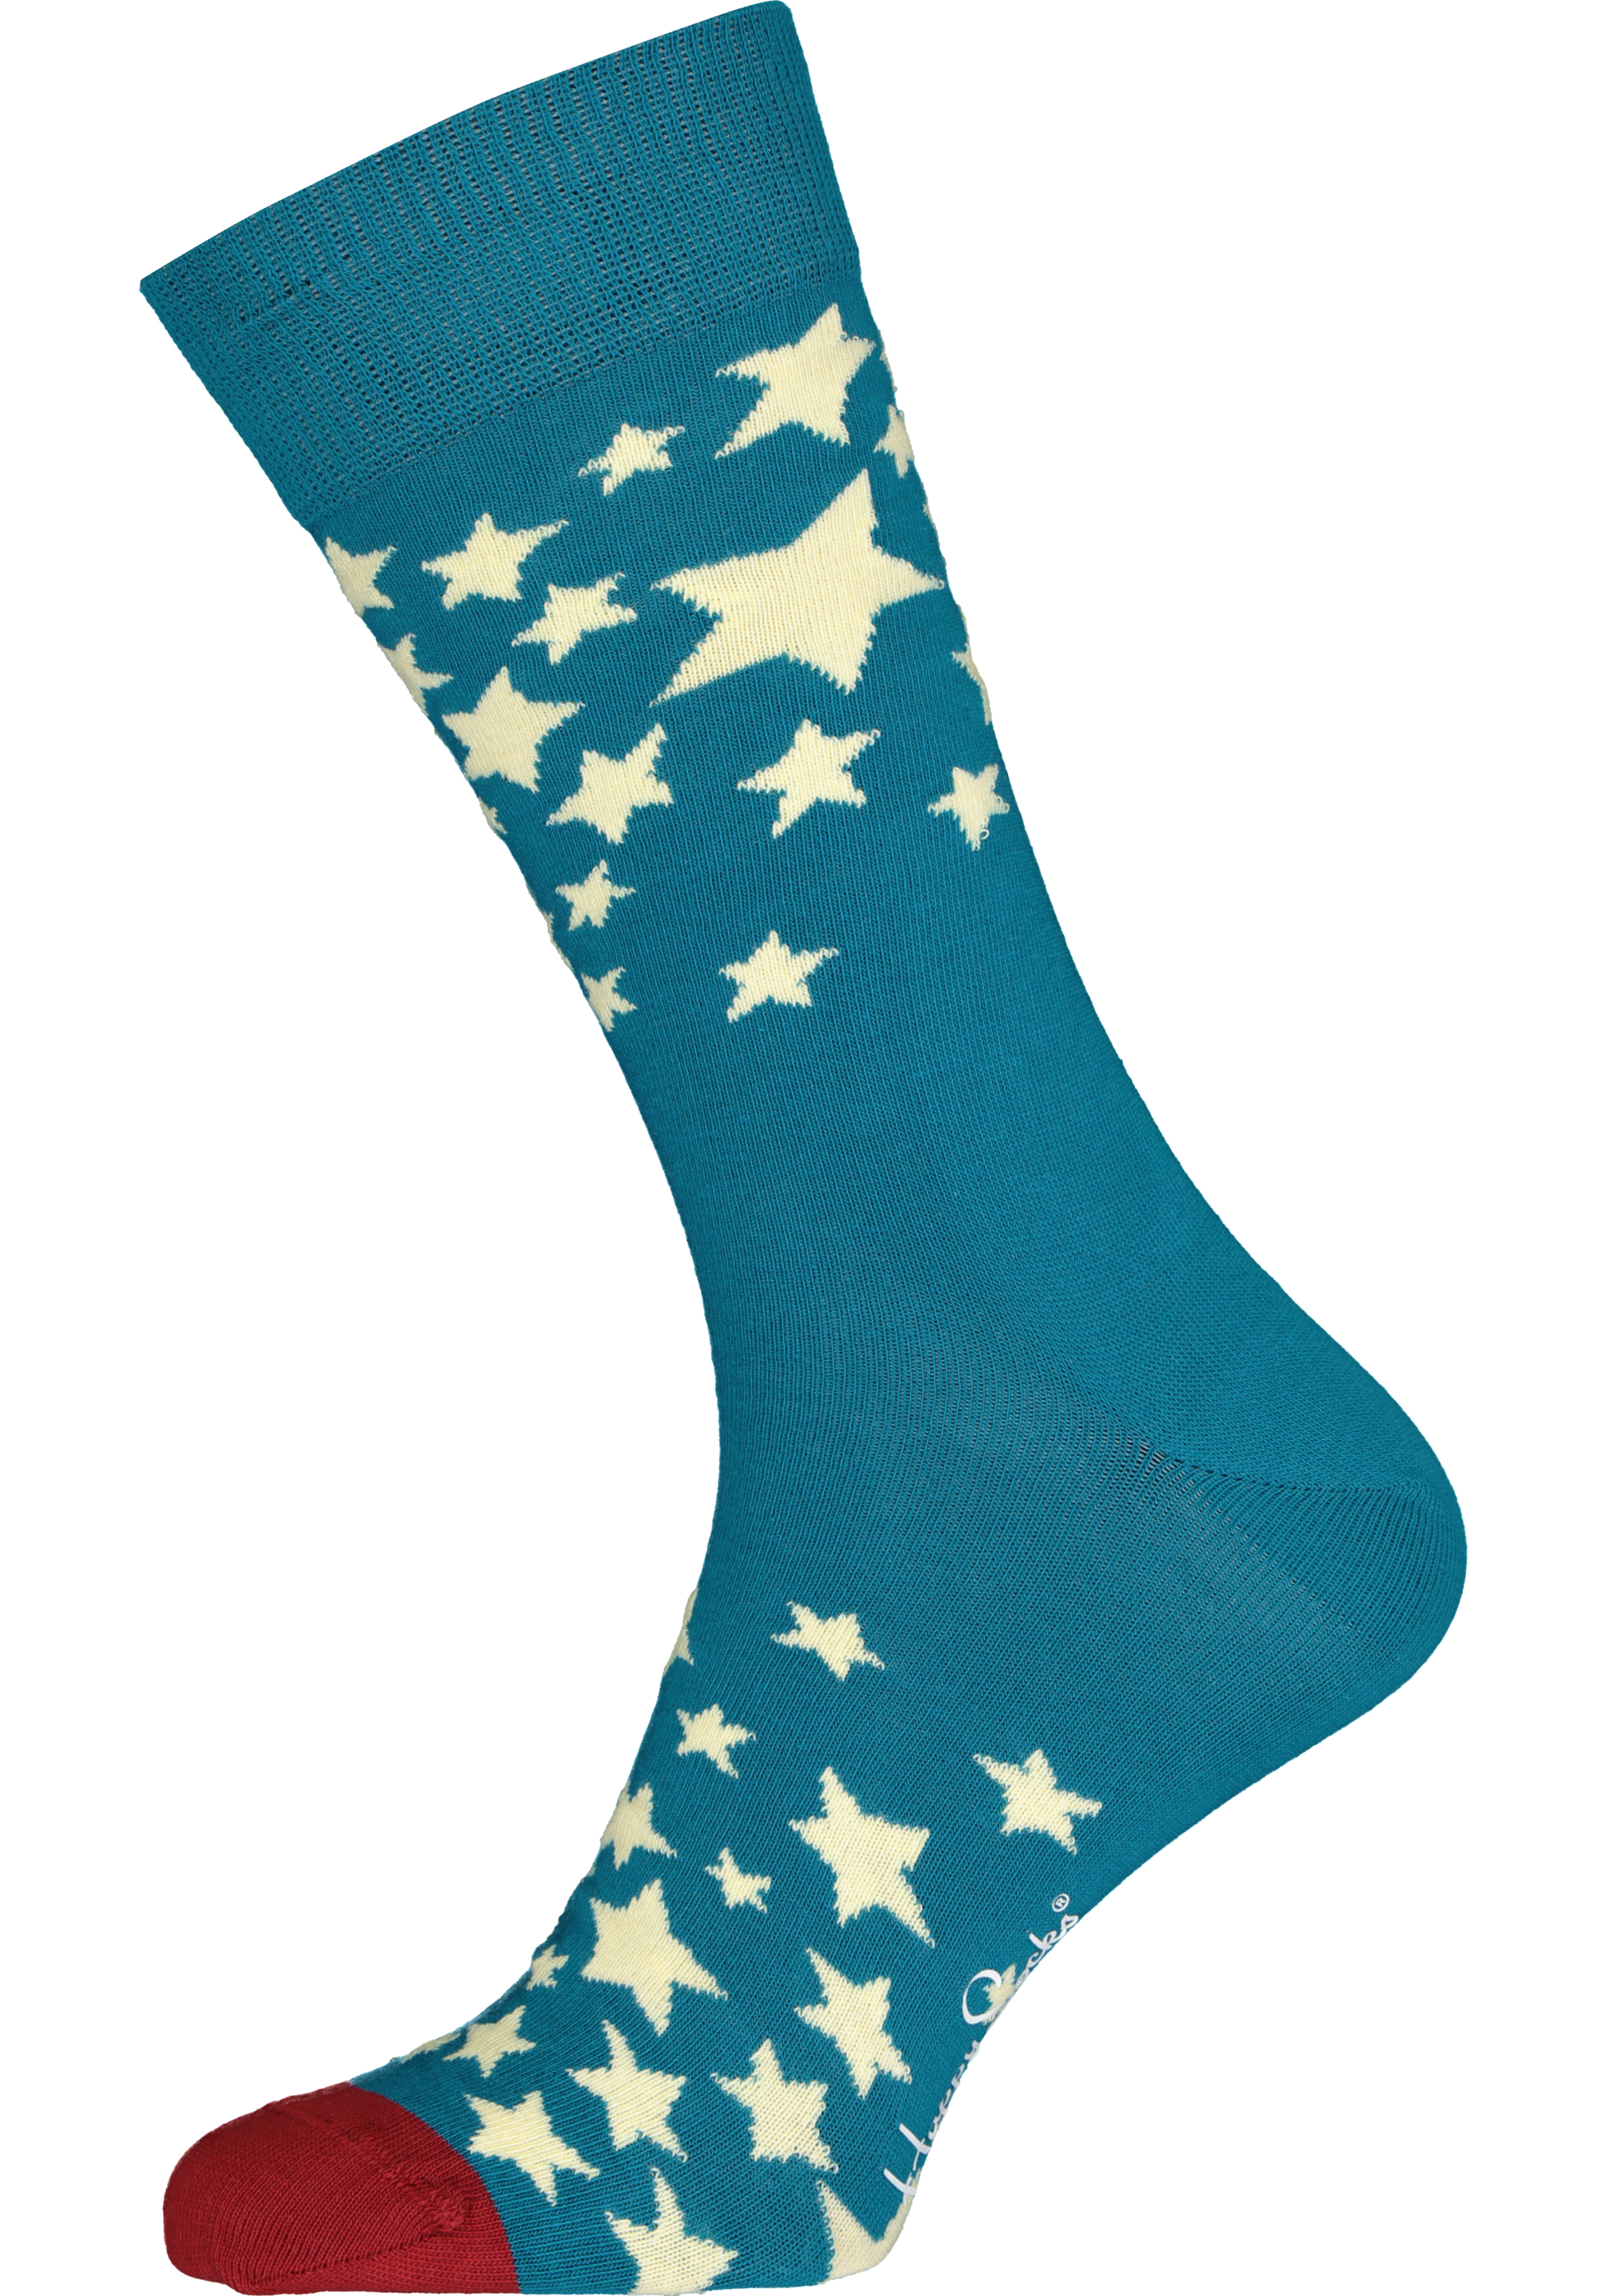 Happy Socks Stars Sock, blauwe strerrenhemel